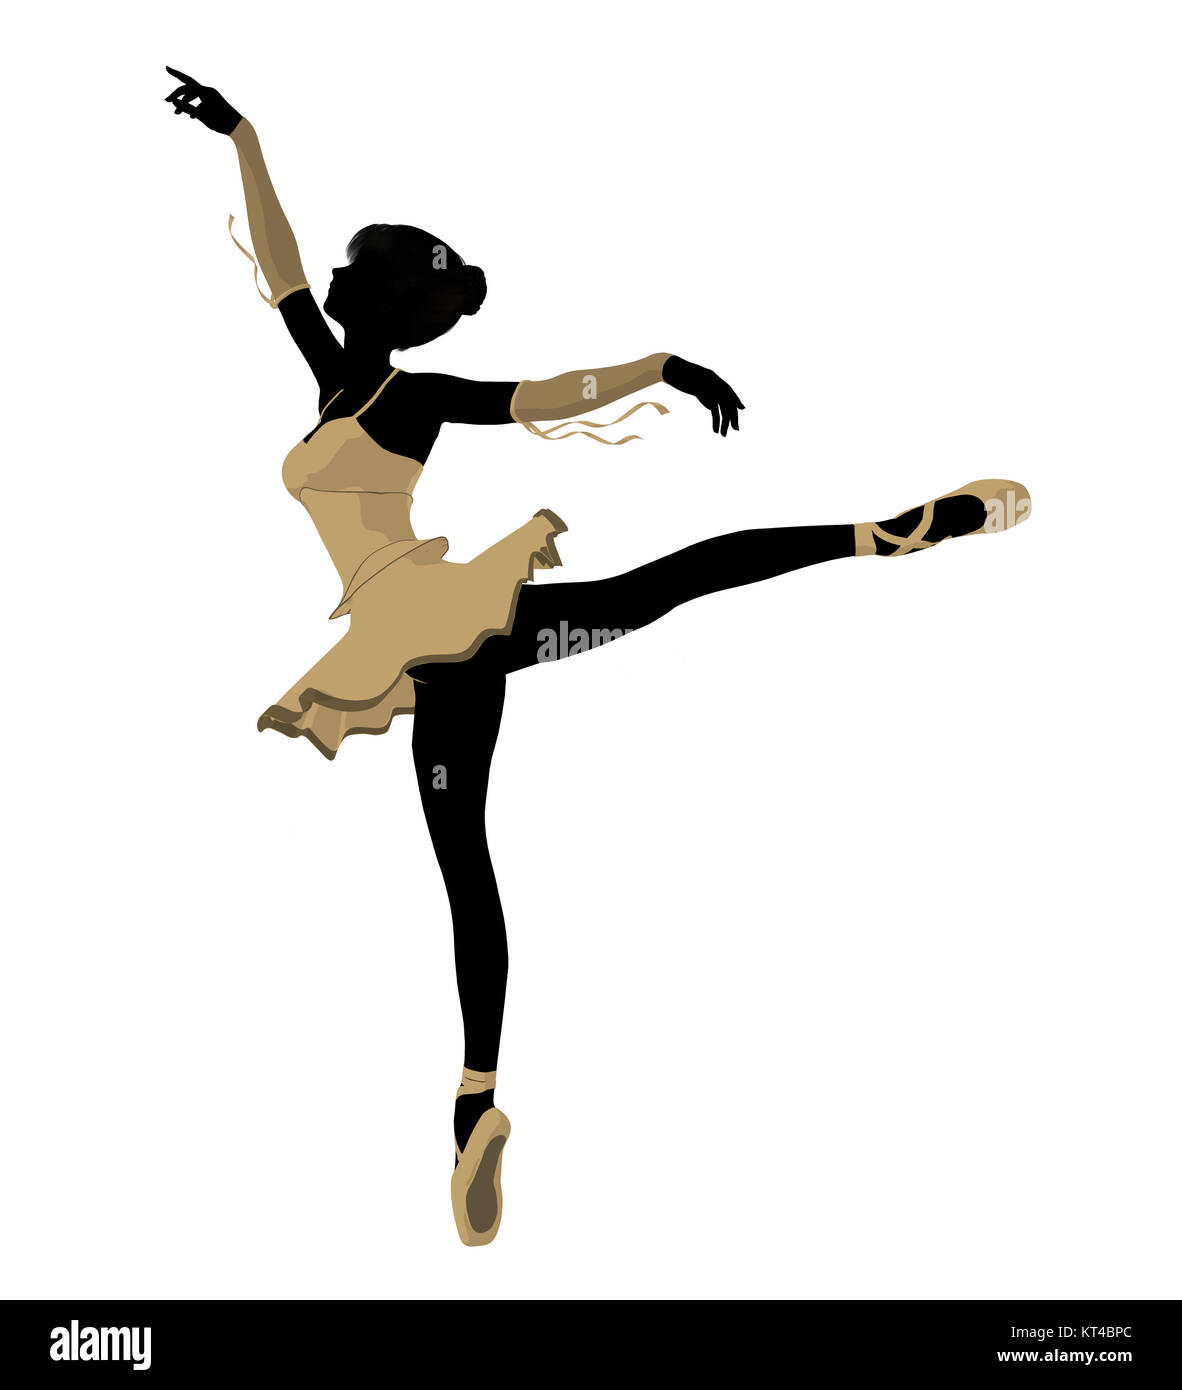 Ballerina silhouette on a white background Stock Photo - Alamy